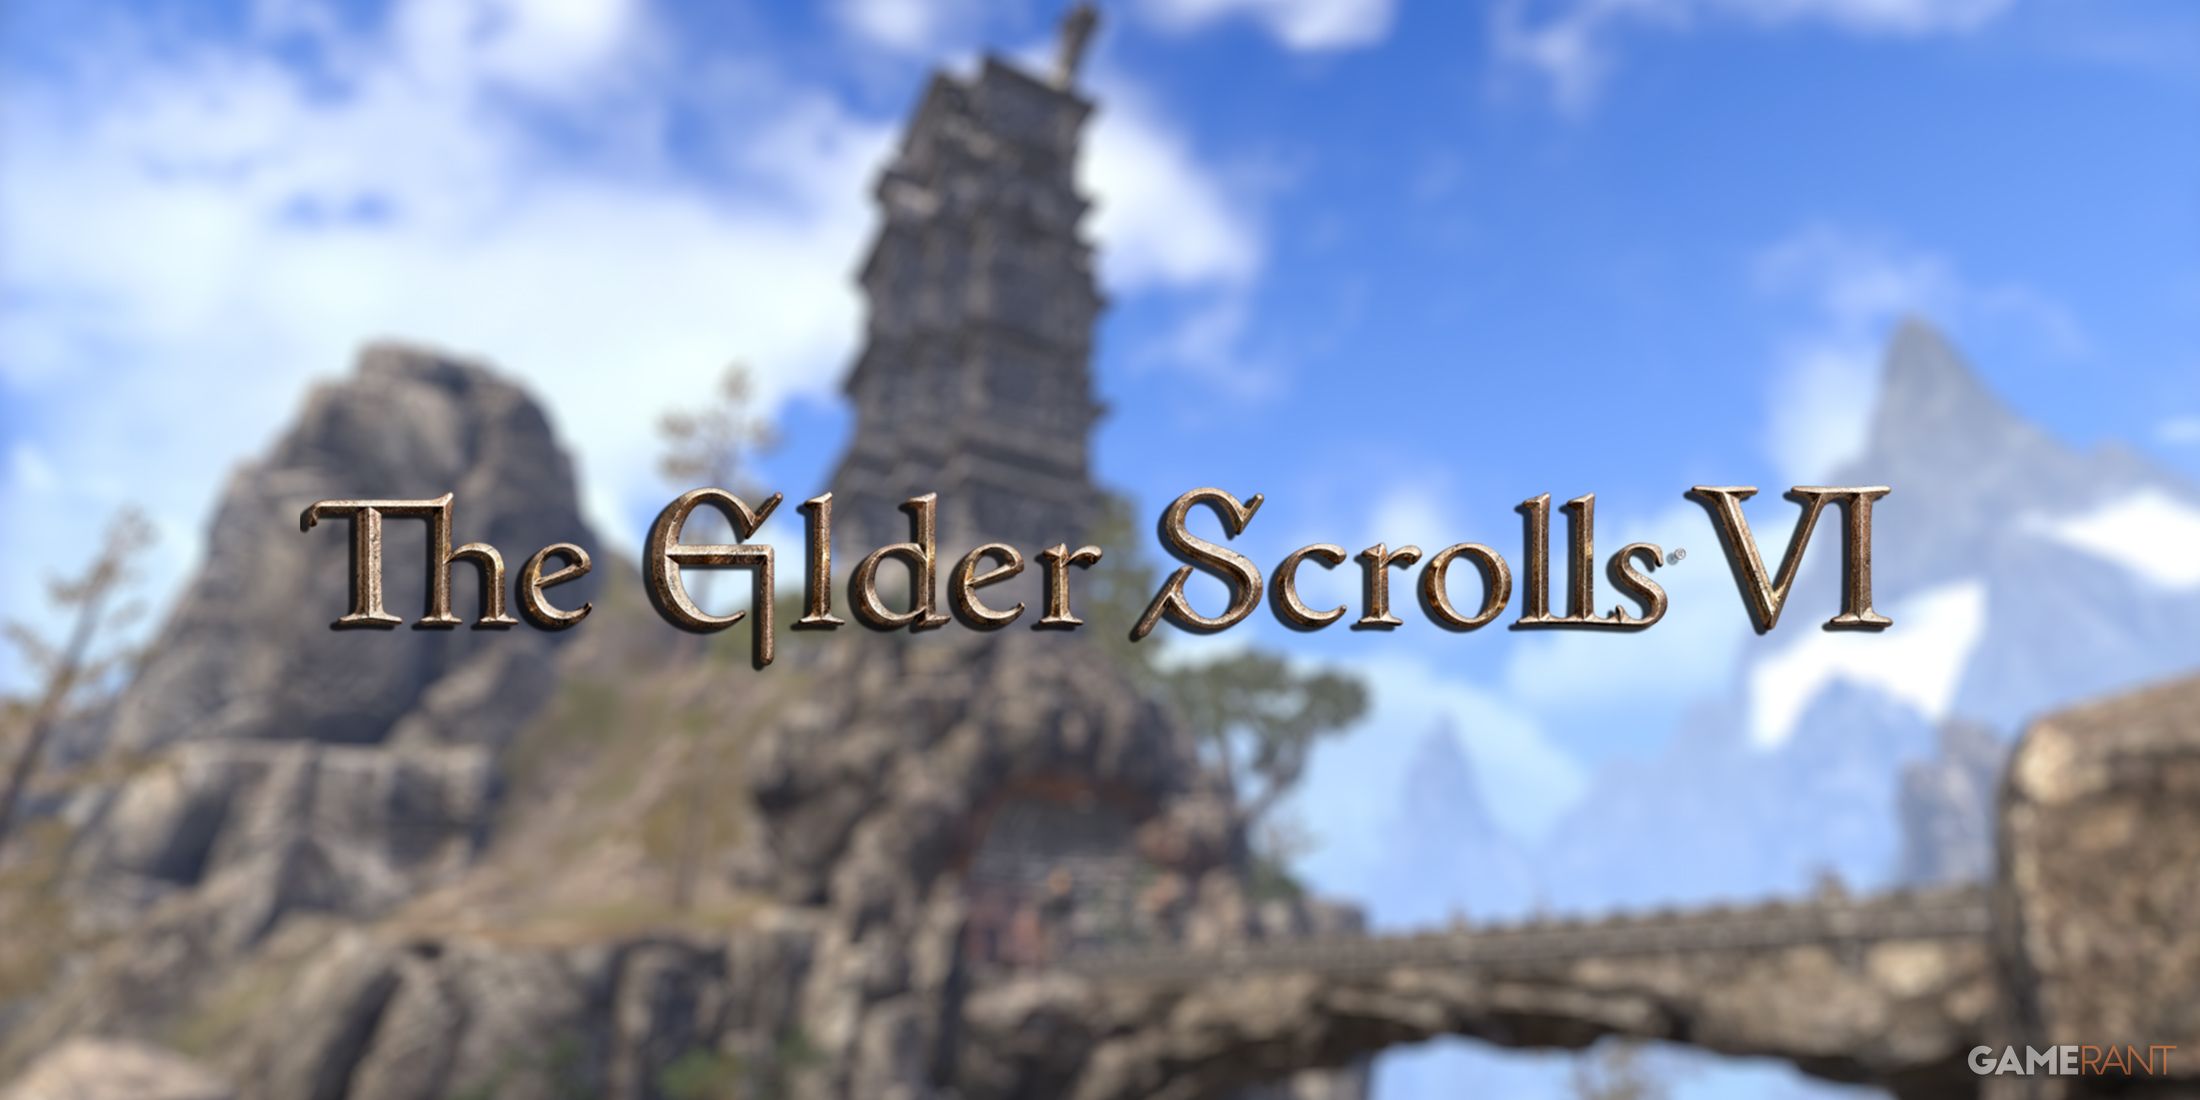 The Elder Scrolls 6 logo on Craglorn background